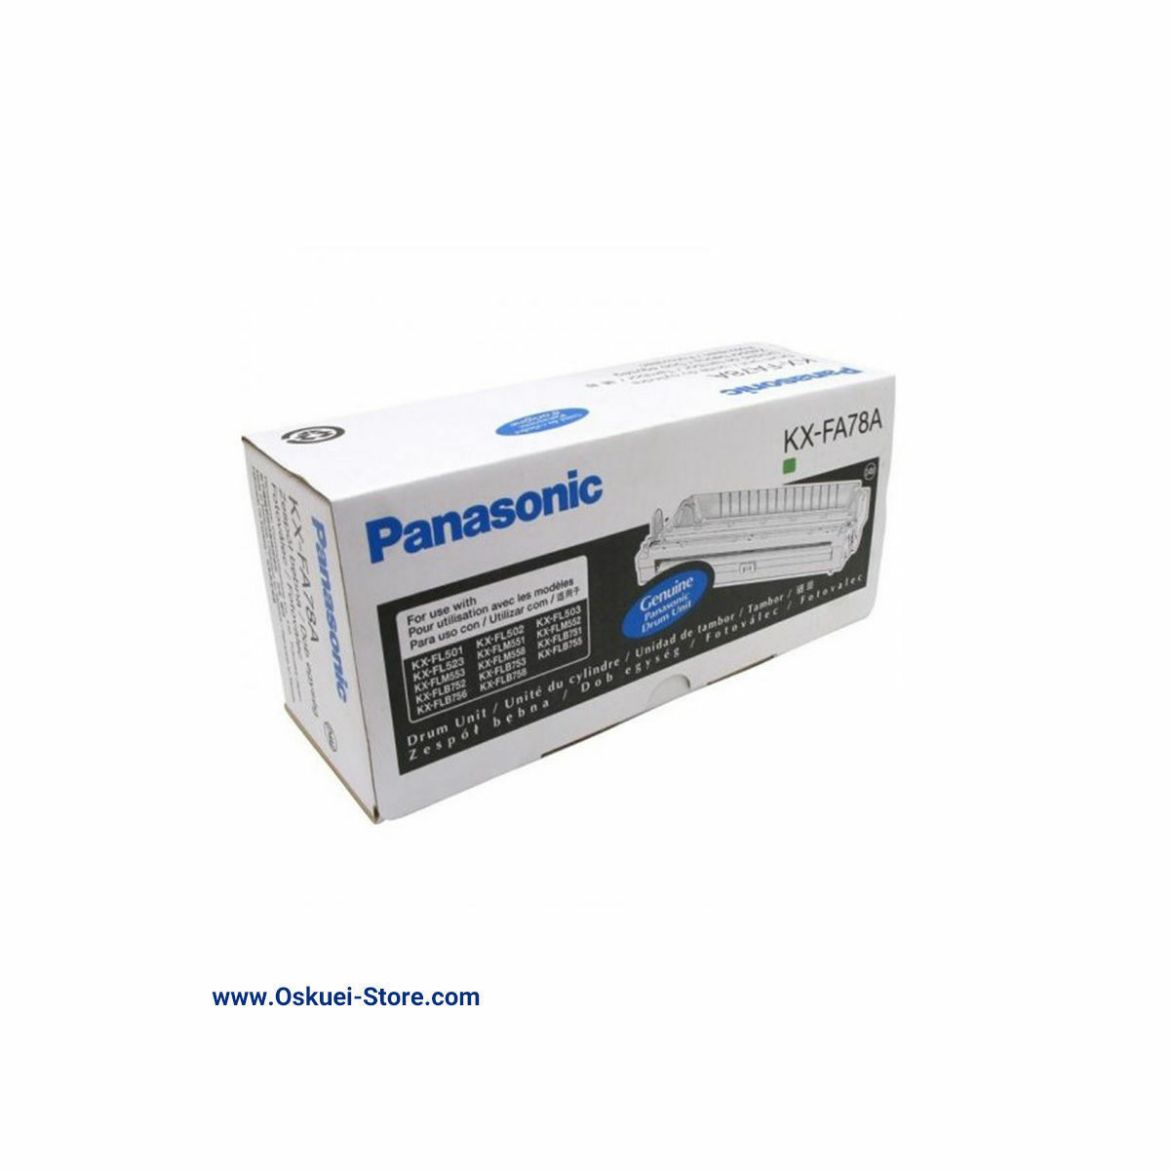 Panasonic KX-FA78 Ink Cartridge For Fax Machines